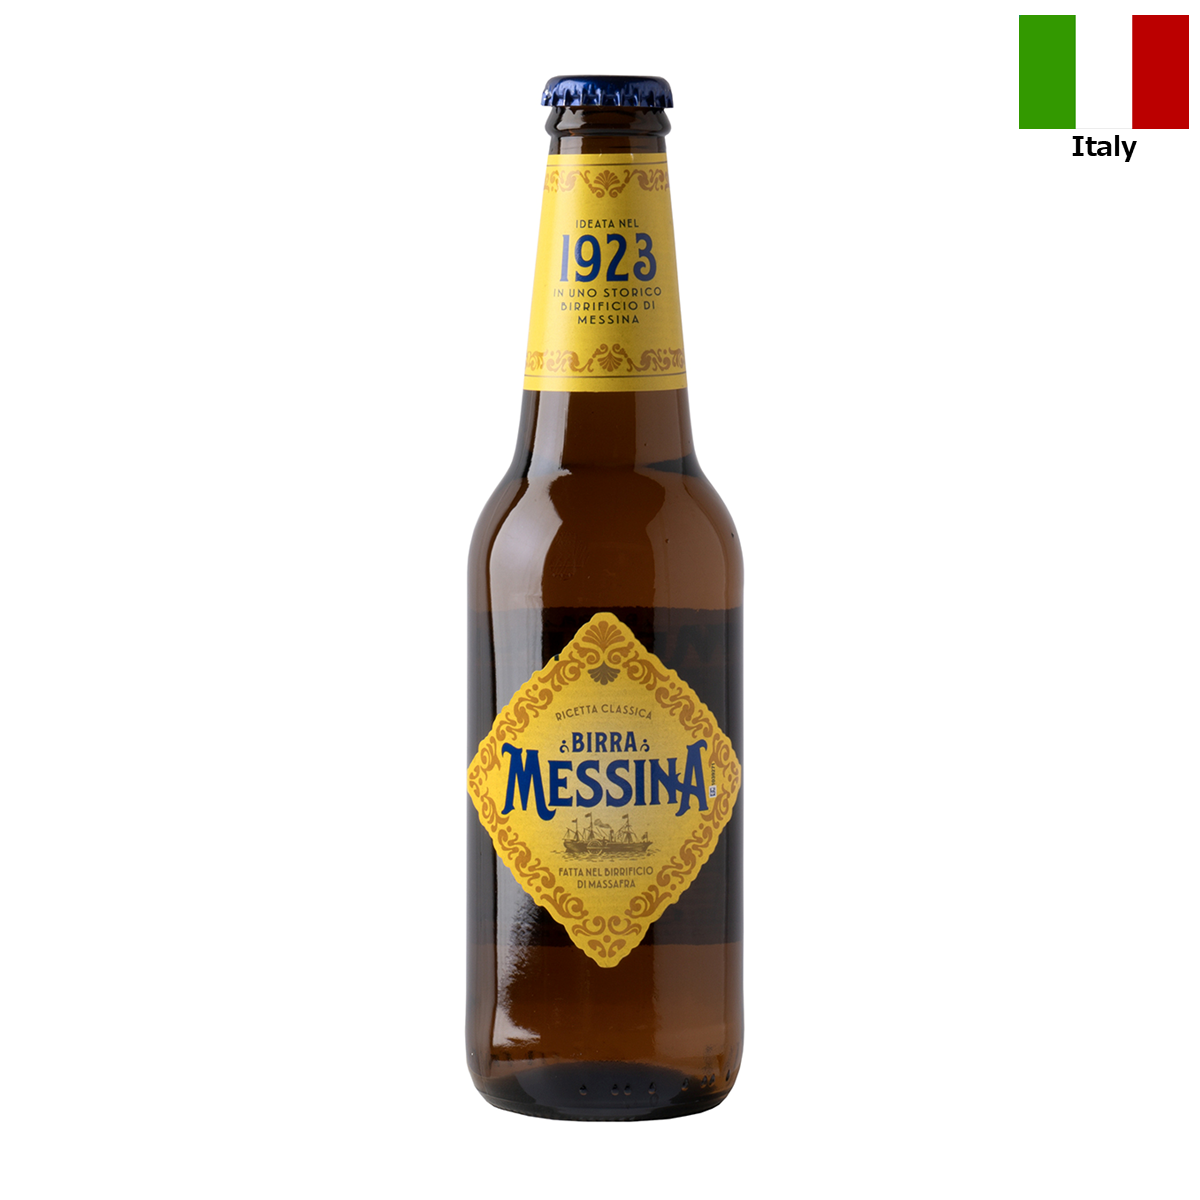 bila Messhi -na330ml bin Italy si Chile a beer import beer craft beer 